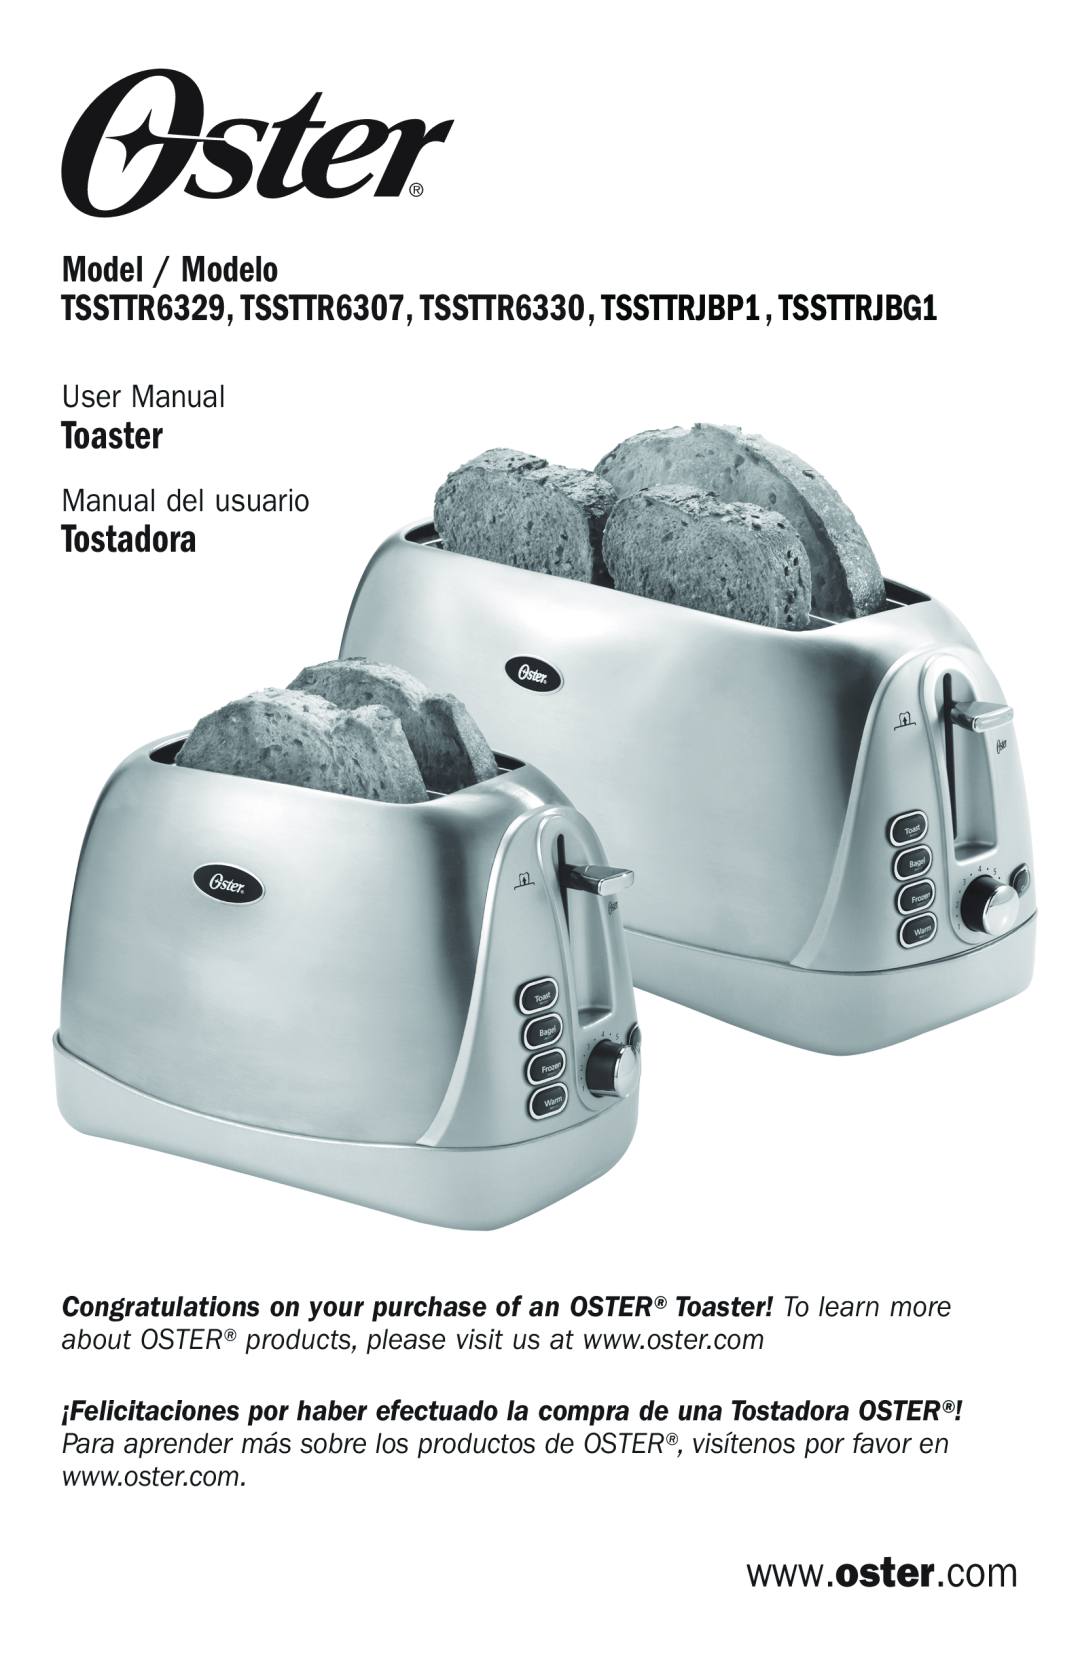 Oster TSSTTR6307, TSSTTR6330, TSSTTR6329 manual Model / Modelo, Manual del usuario, Toaster, Tostadora 